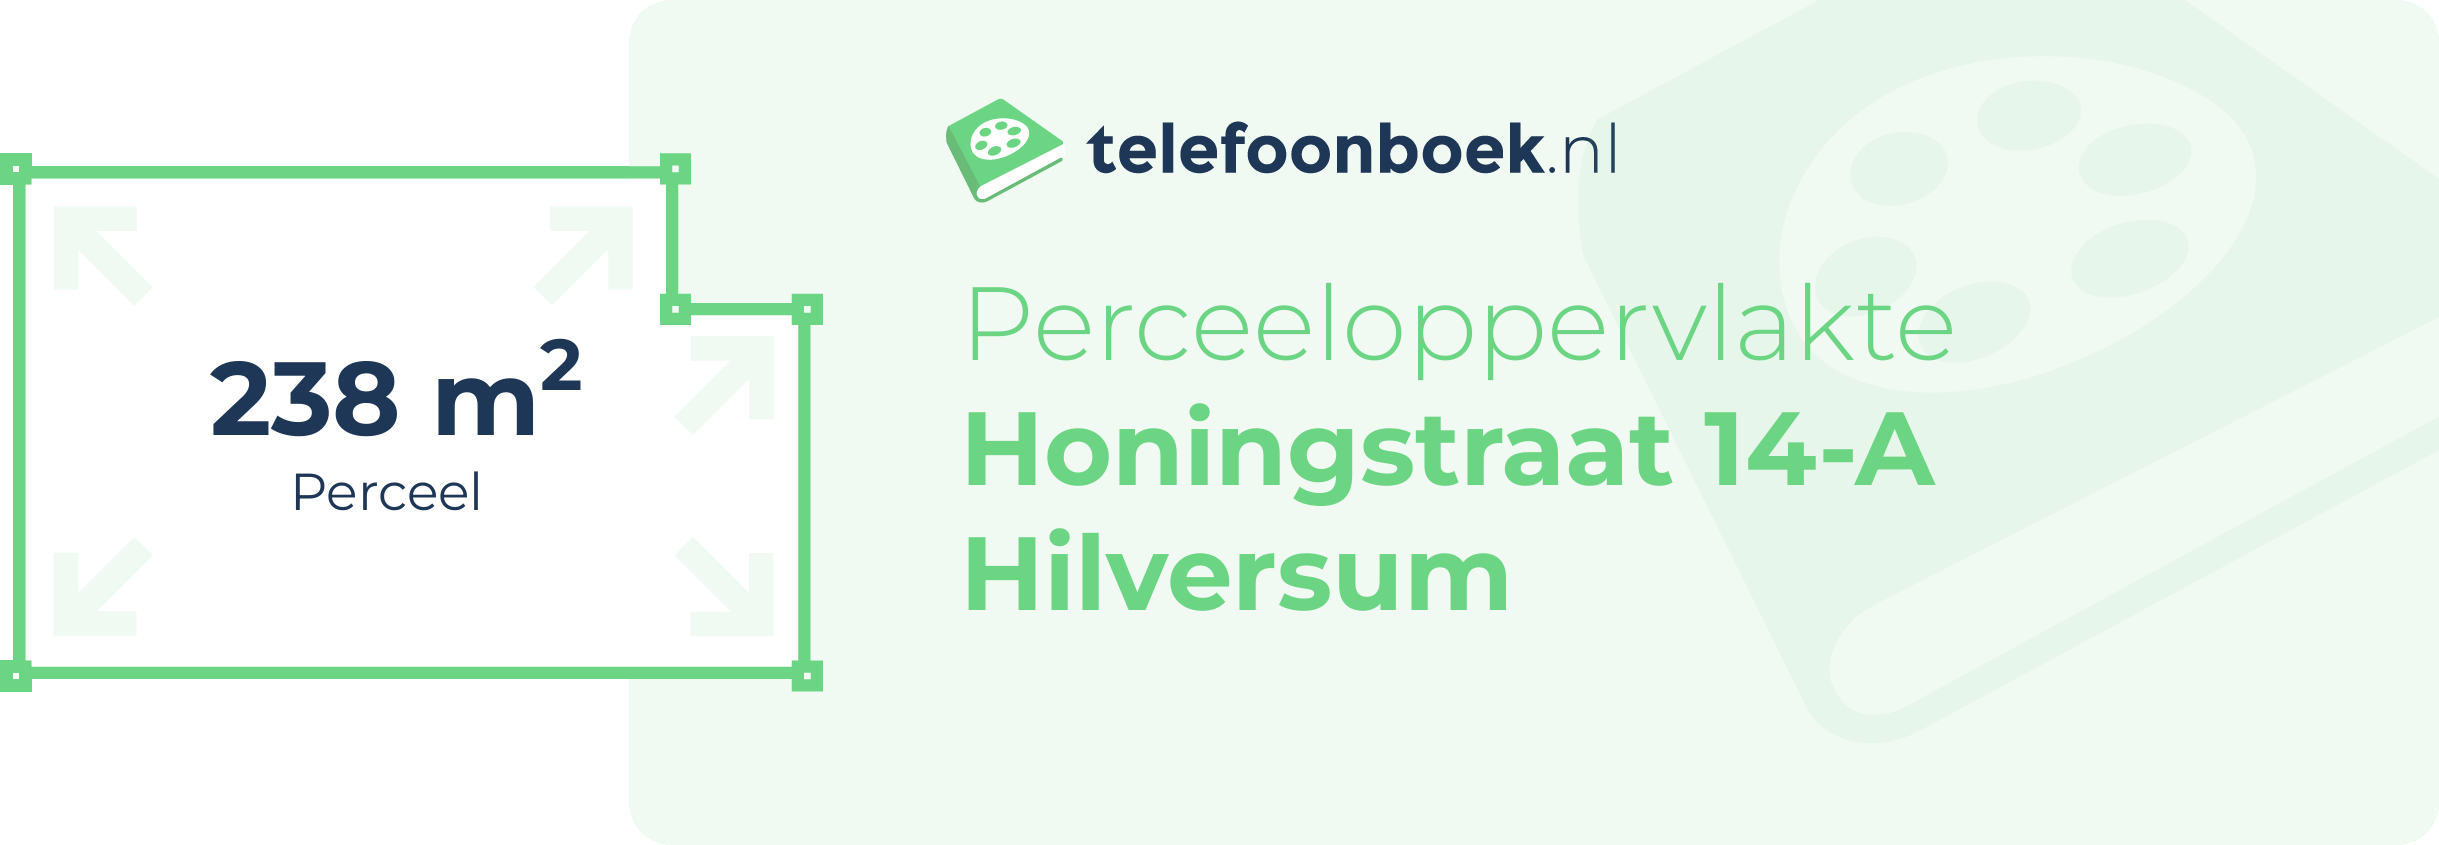 Perceeloppervlakte Honingstraat 14-A Hilversum